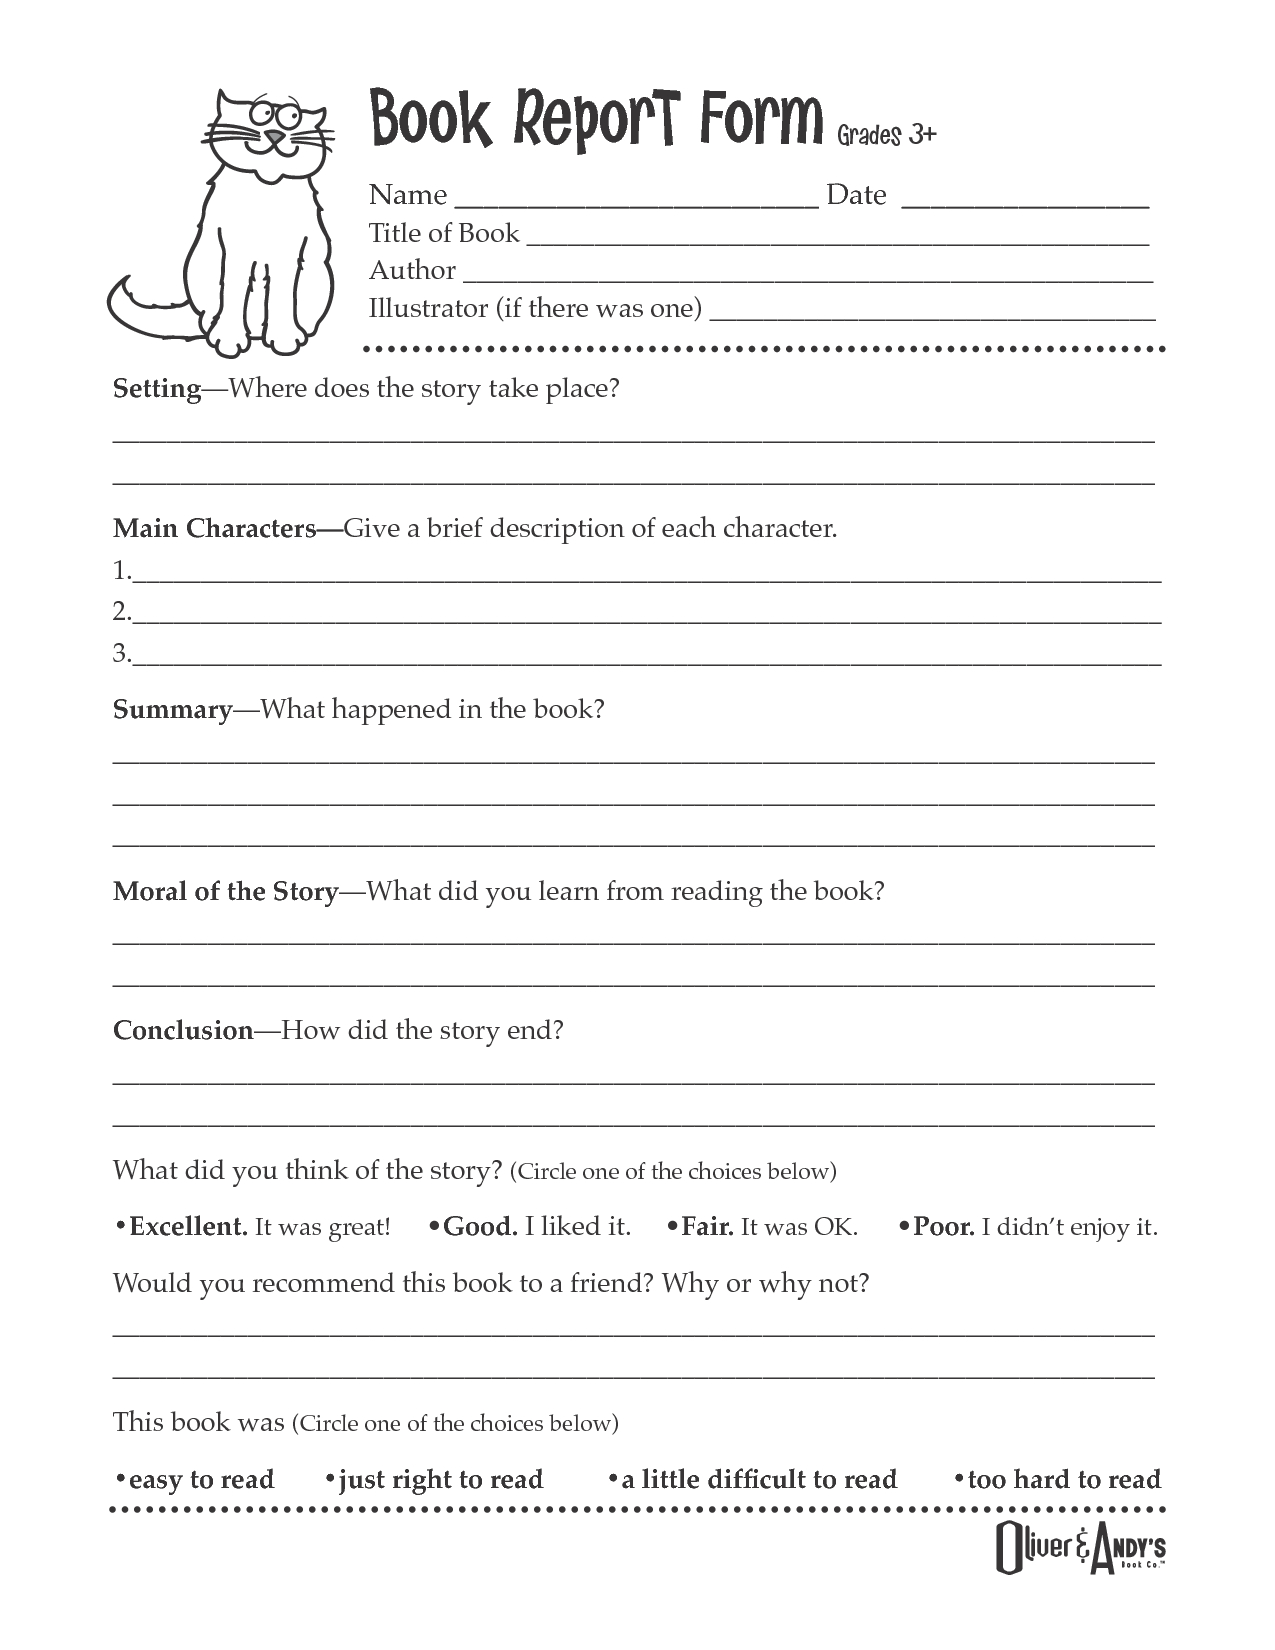 Second Grade Book Report Template | Book Report Form Grades Inside Book Report Template 2Nd Grade